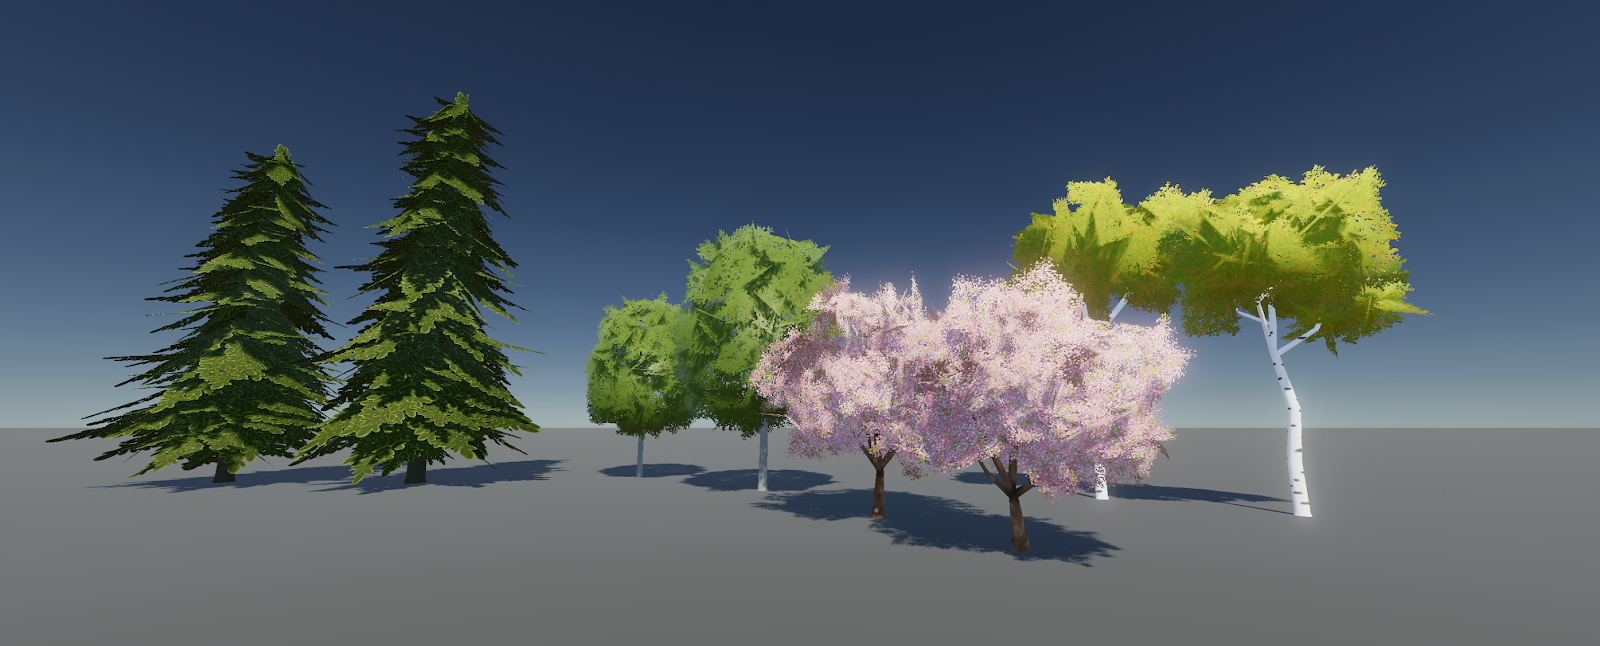 Unity trees. The witness деревья. Дерево 3d. Деревья для моделирования. Дерево в блендер 3д.